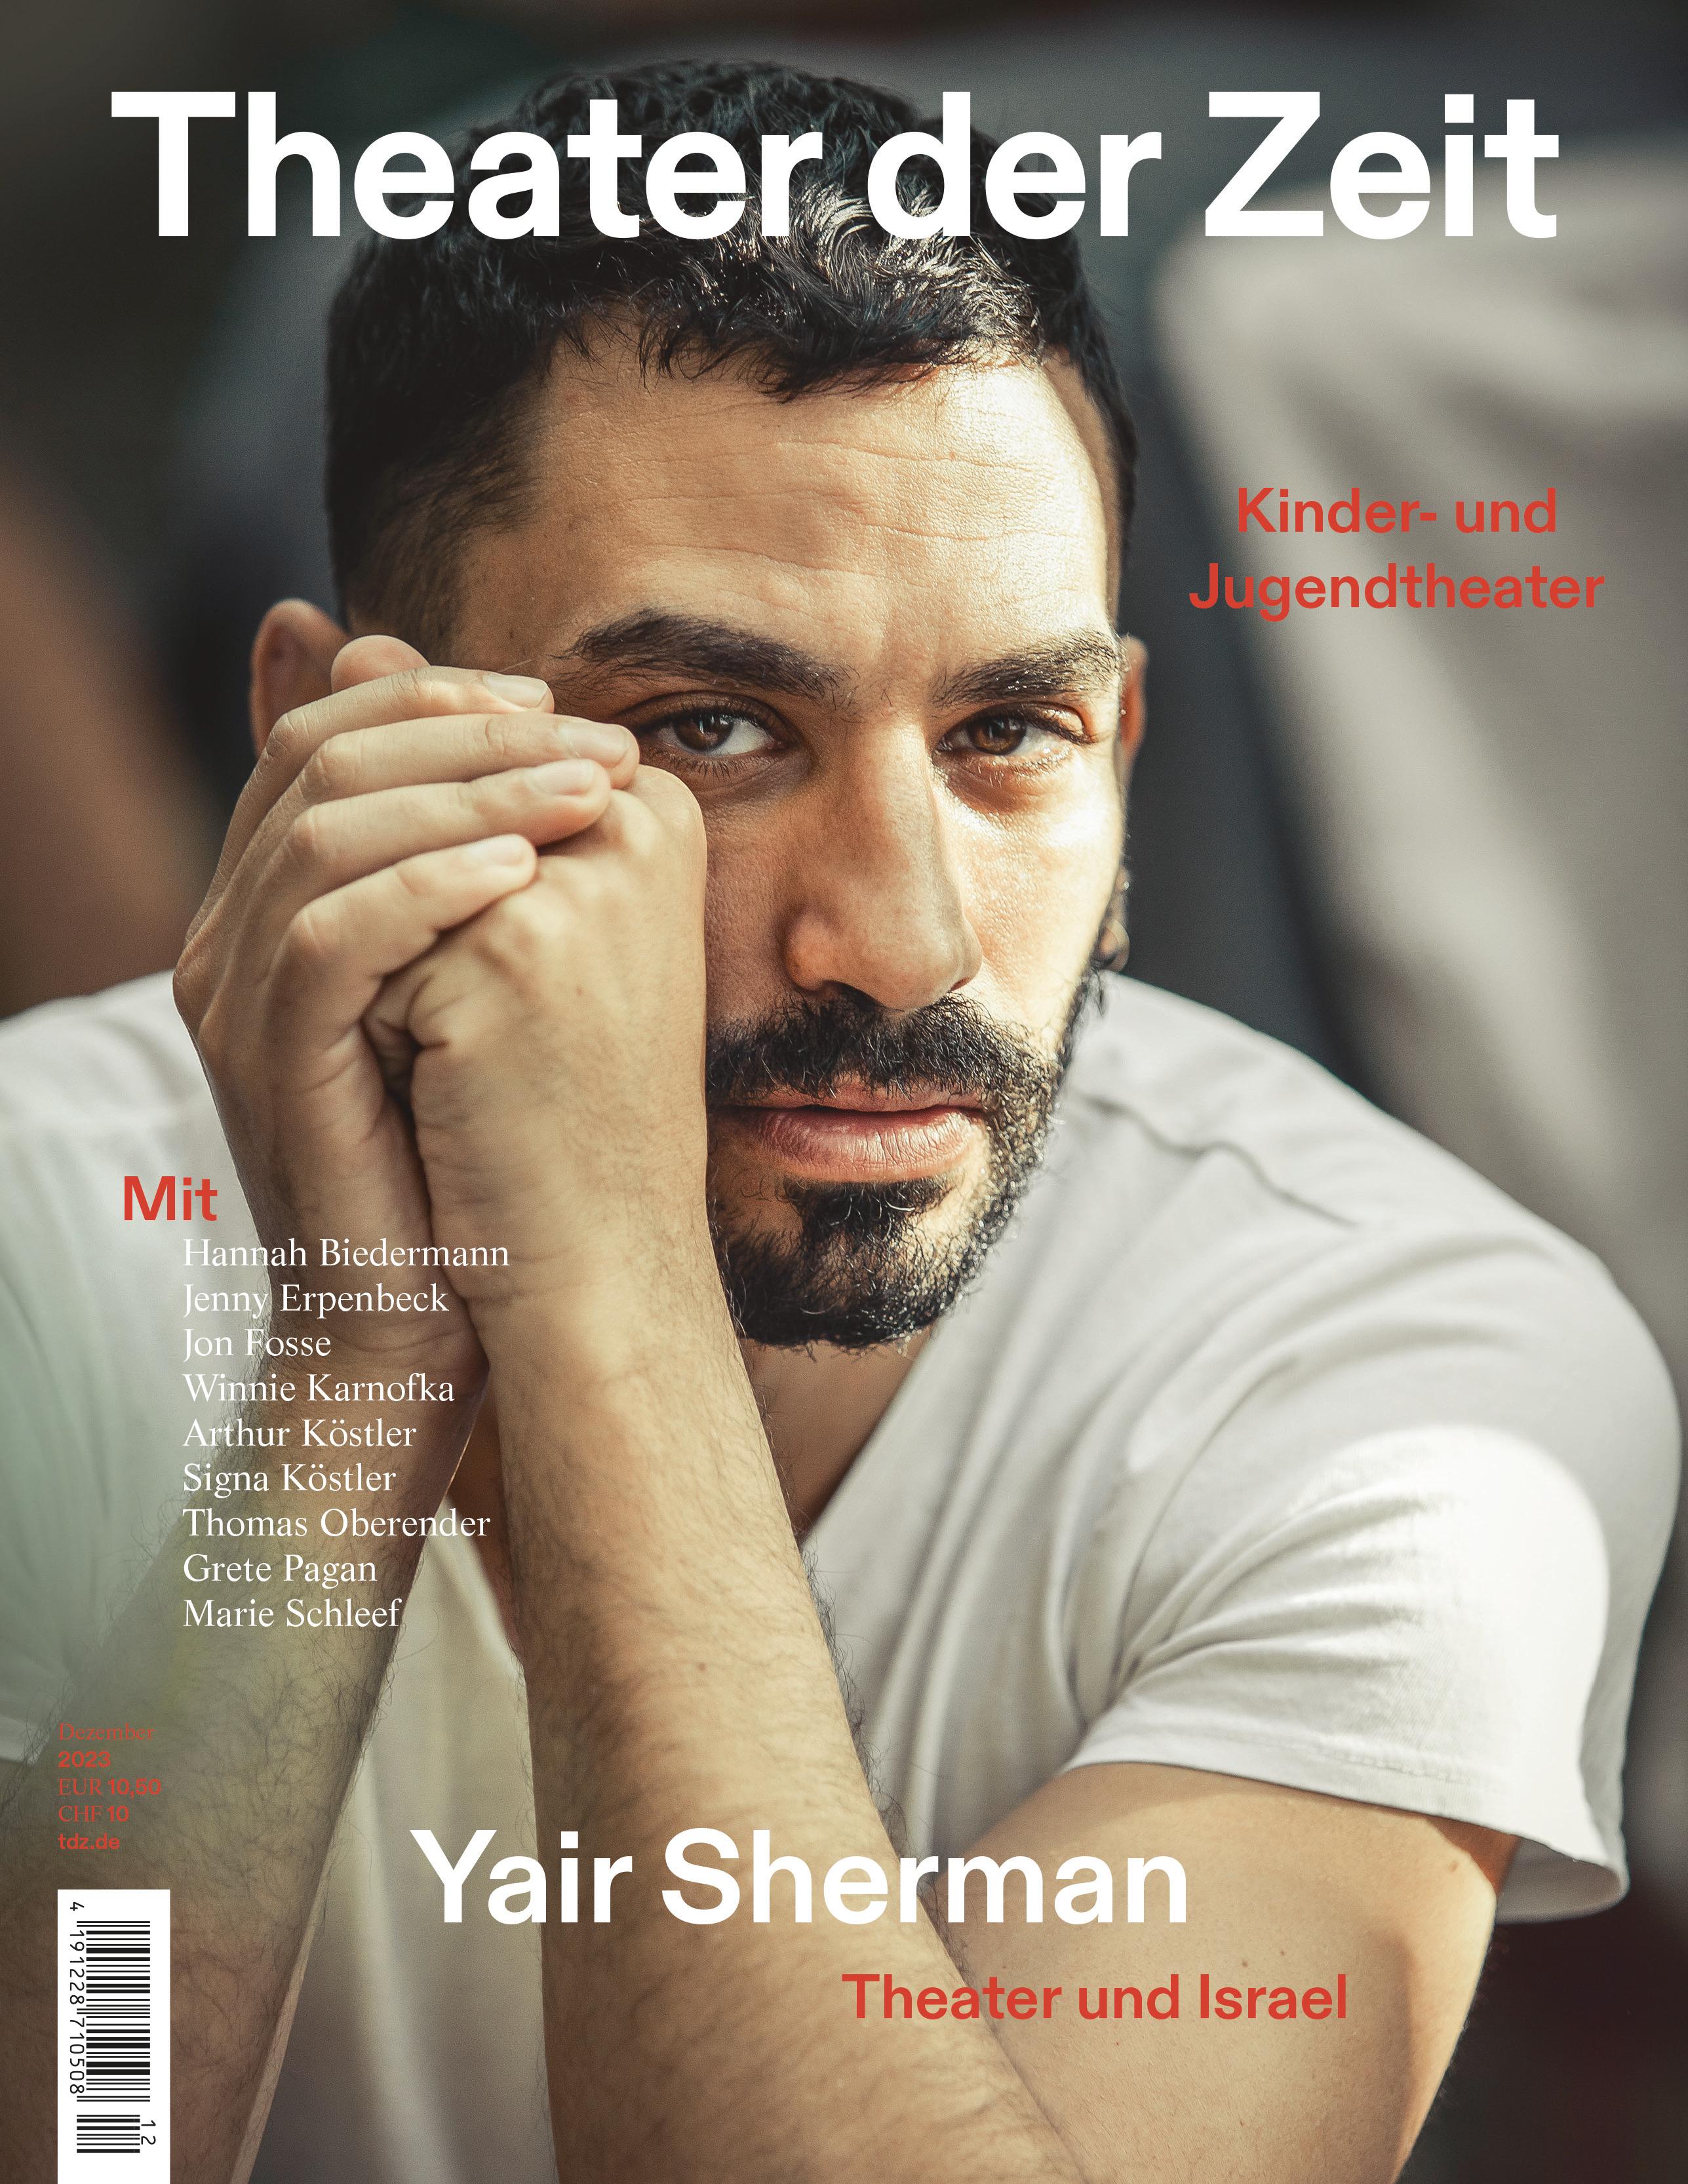 Theaterregisseur Yair Shermann